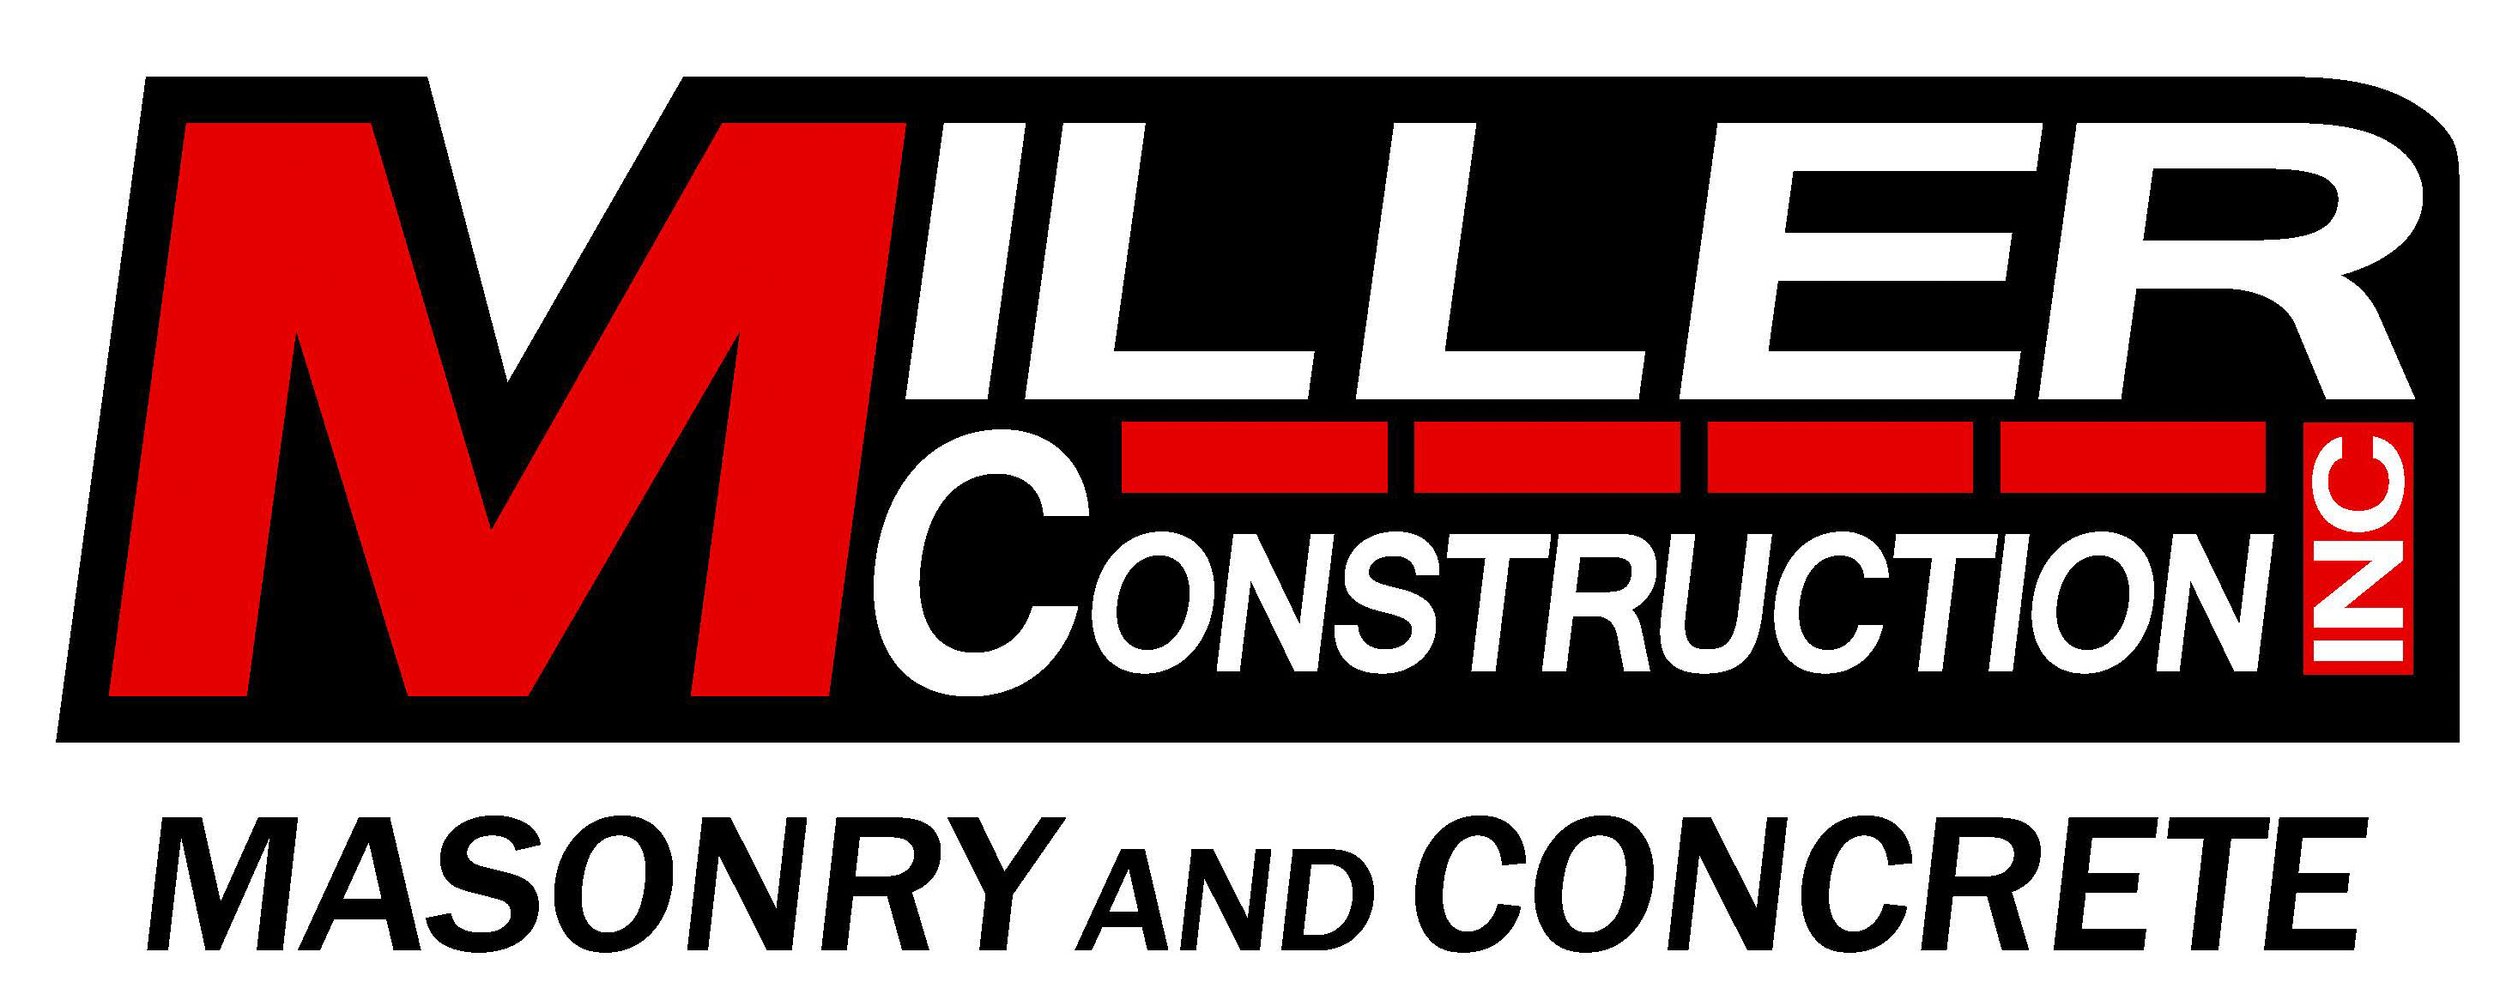 Miller Construction-Concrete & Masonry.jpg